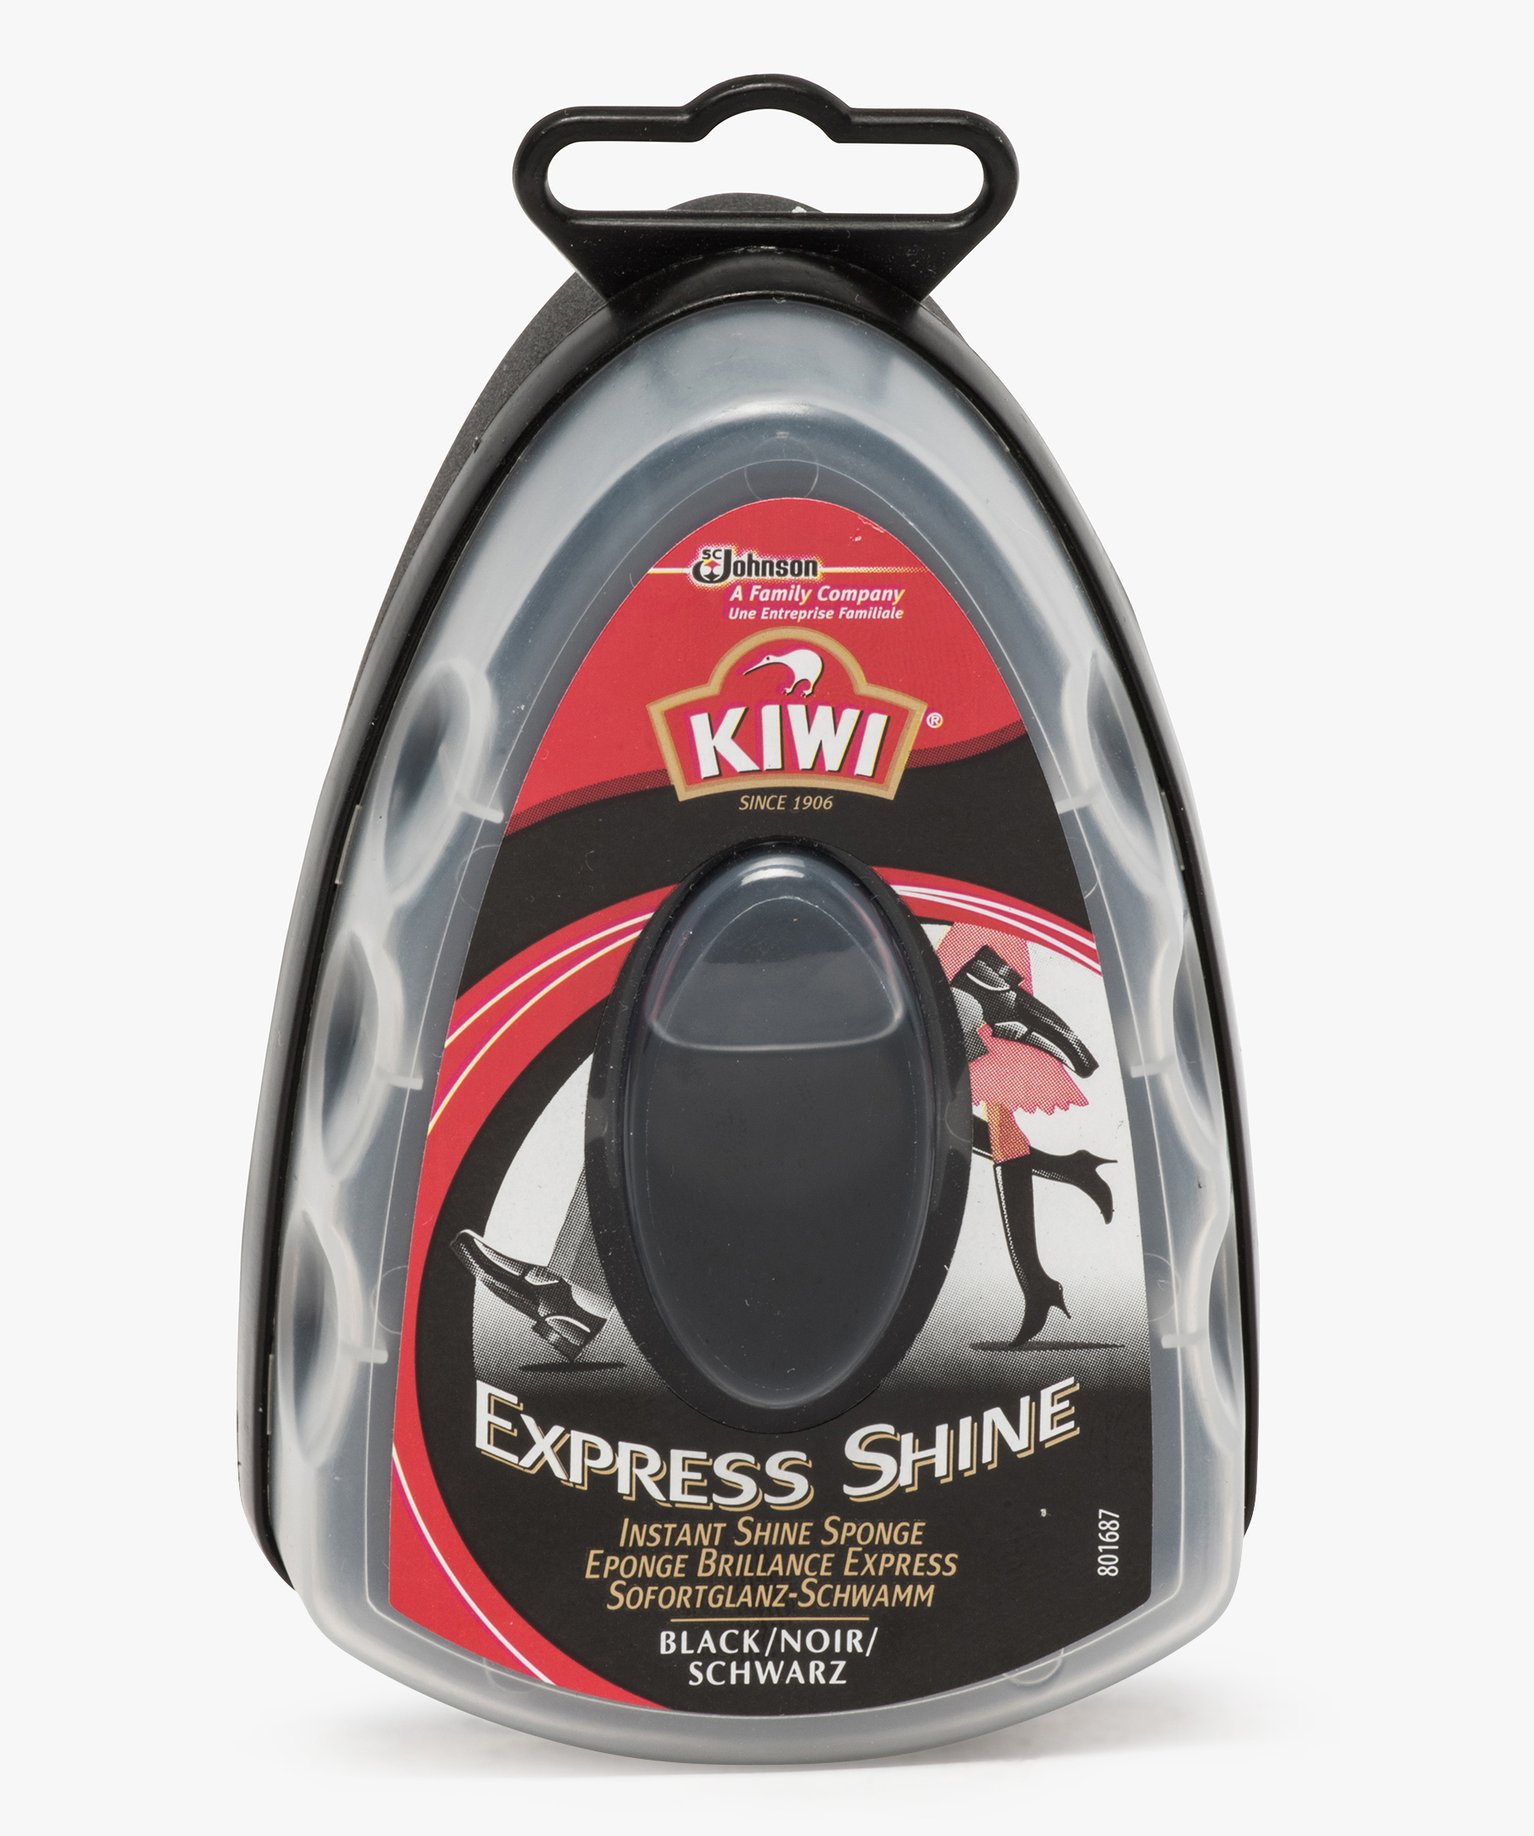 eponge brillance express  express shine  kiwi noir noir